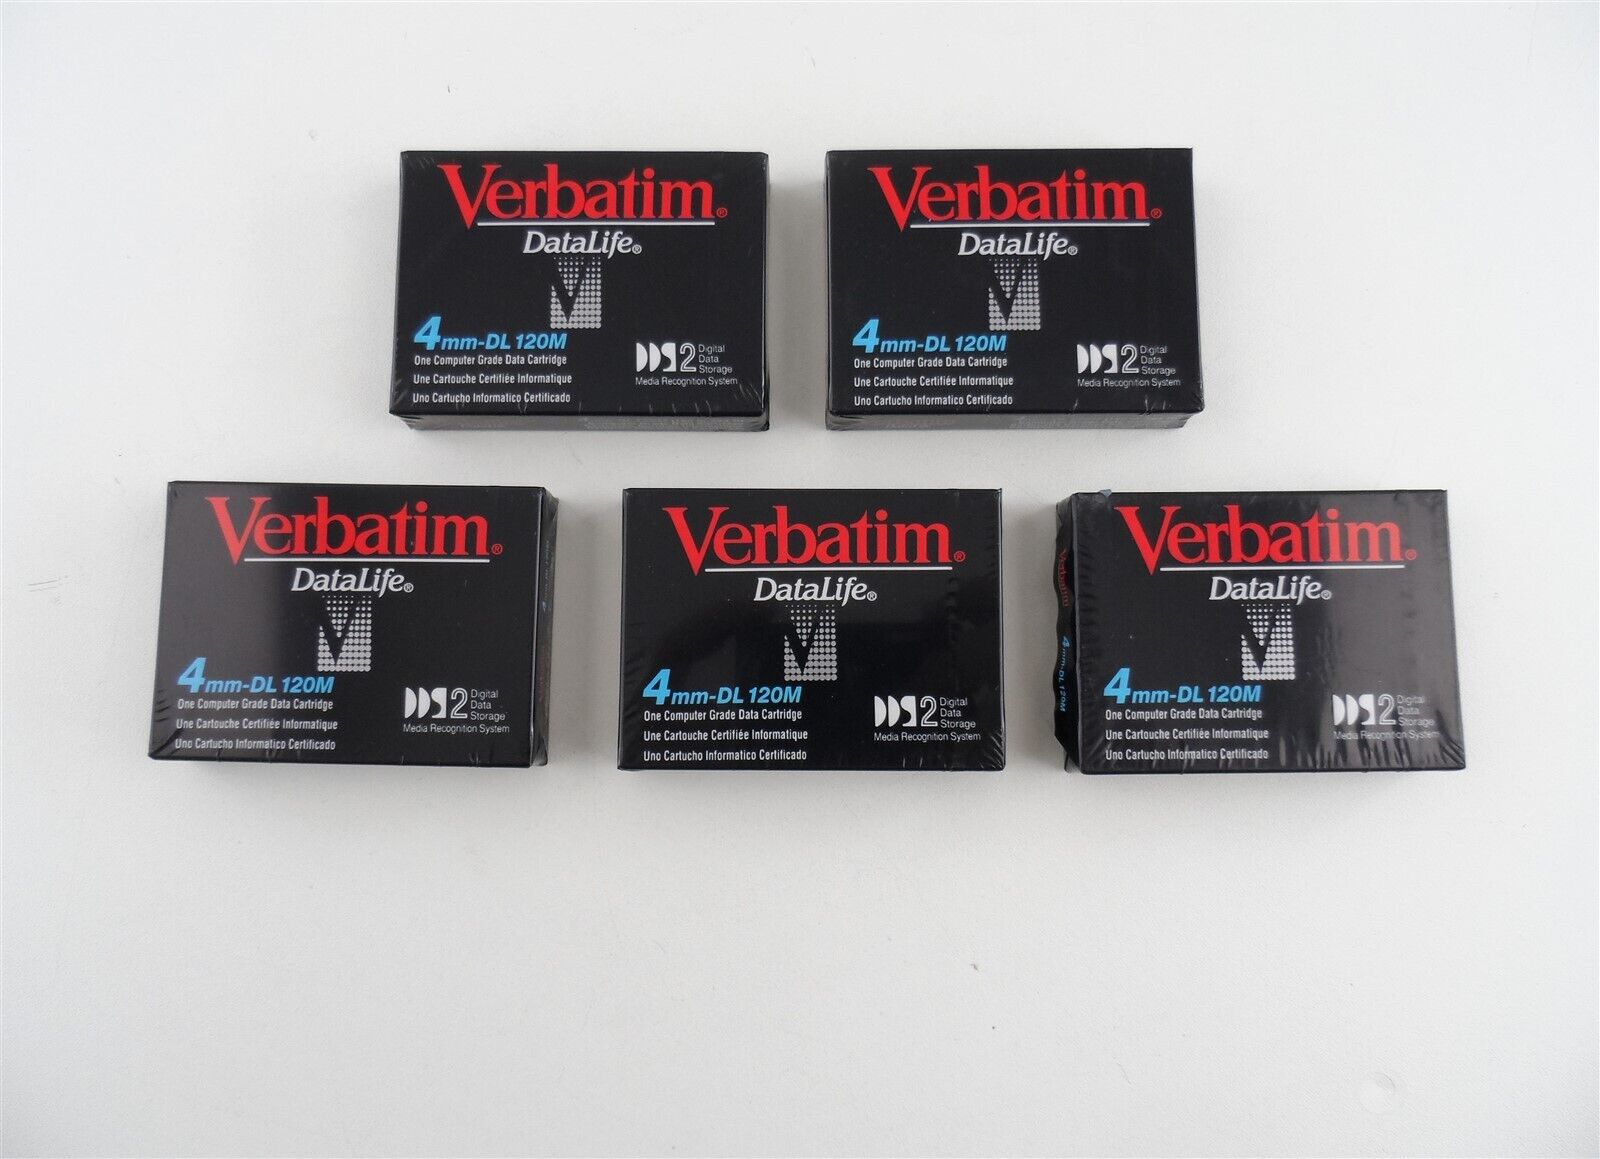 Lot of 5 Verbatim DataLife 4mm-DL 120M DDS2 4GB Data Cartridge New